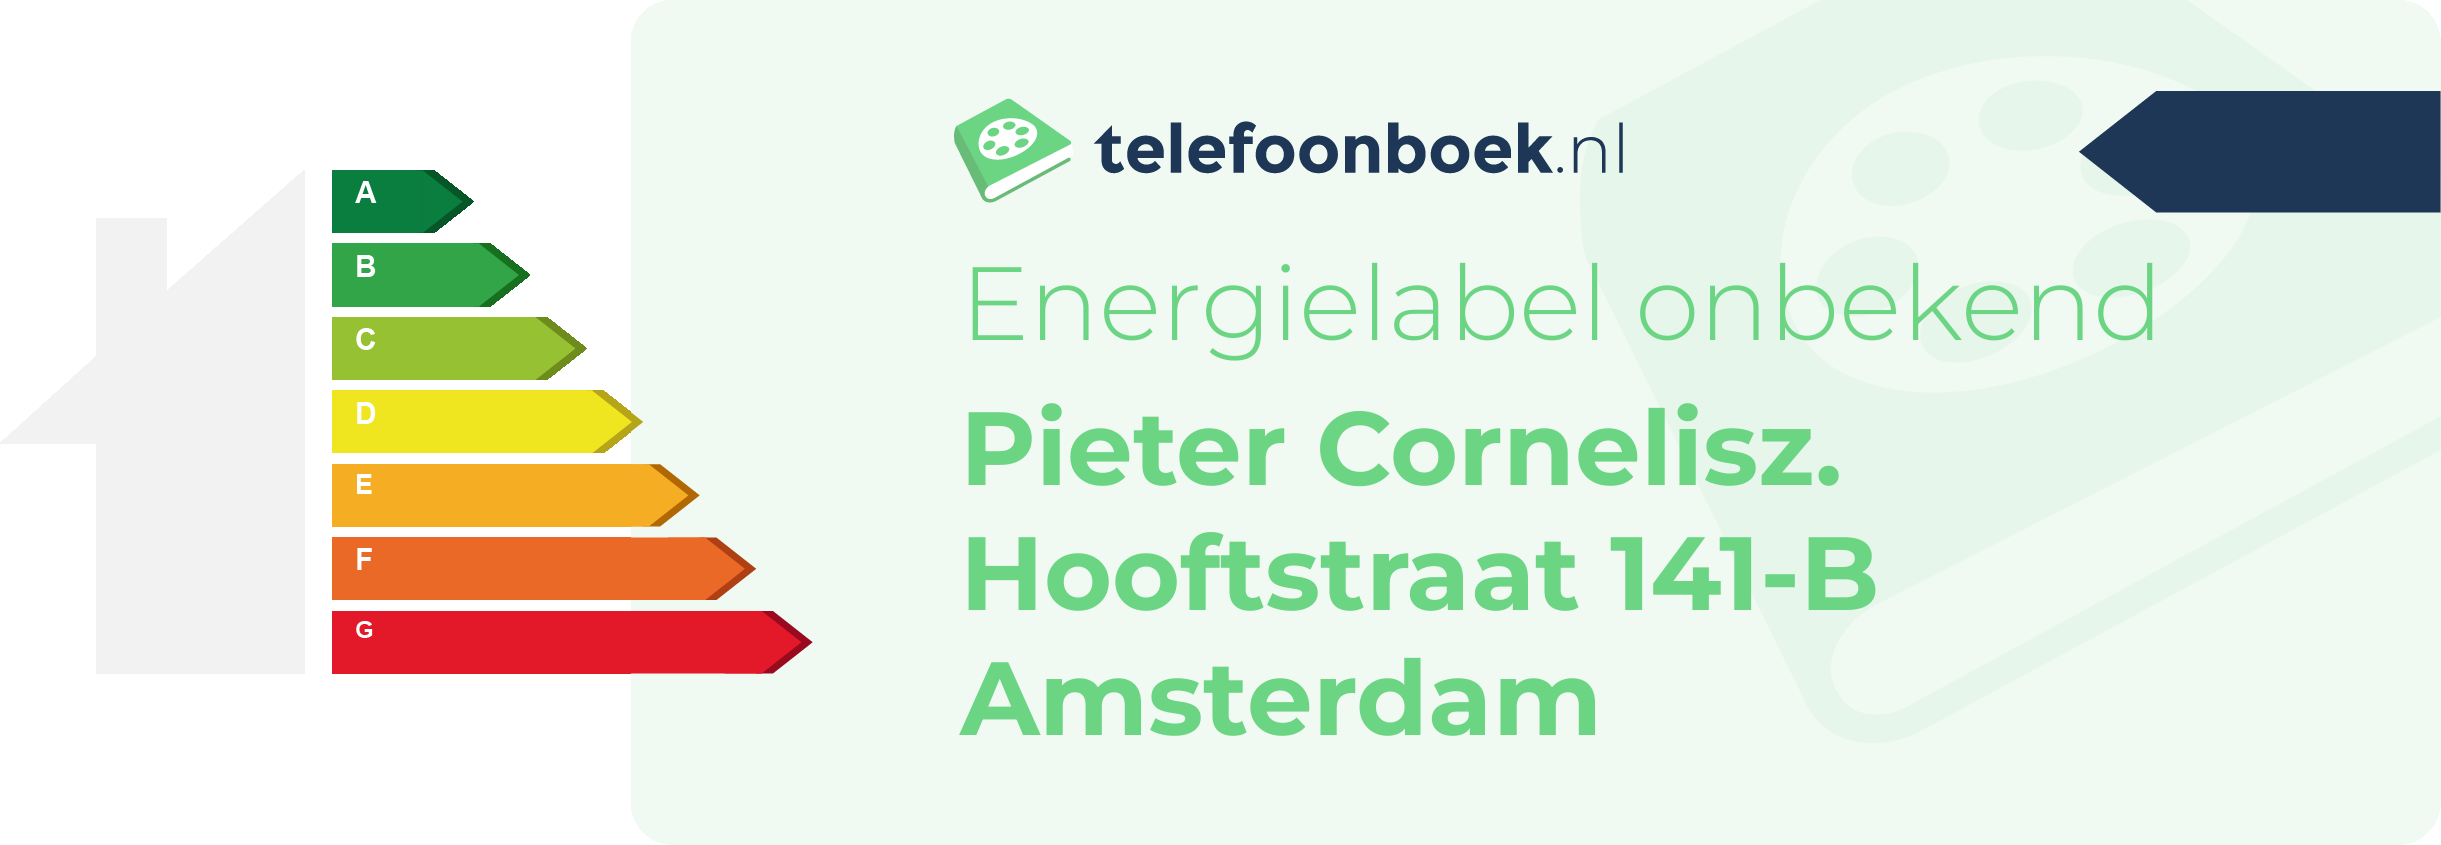 Energielabel Pieter Cornelisz. Hooftstraat 141-B Amsterdam